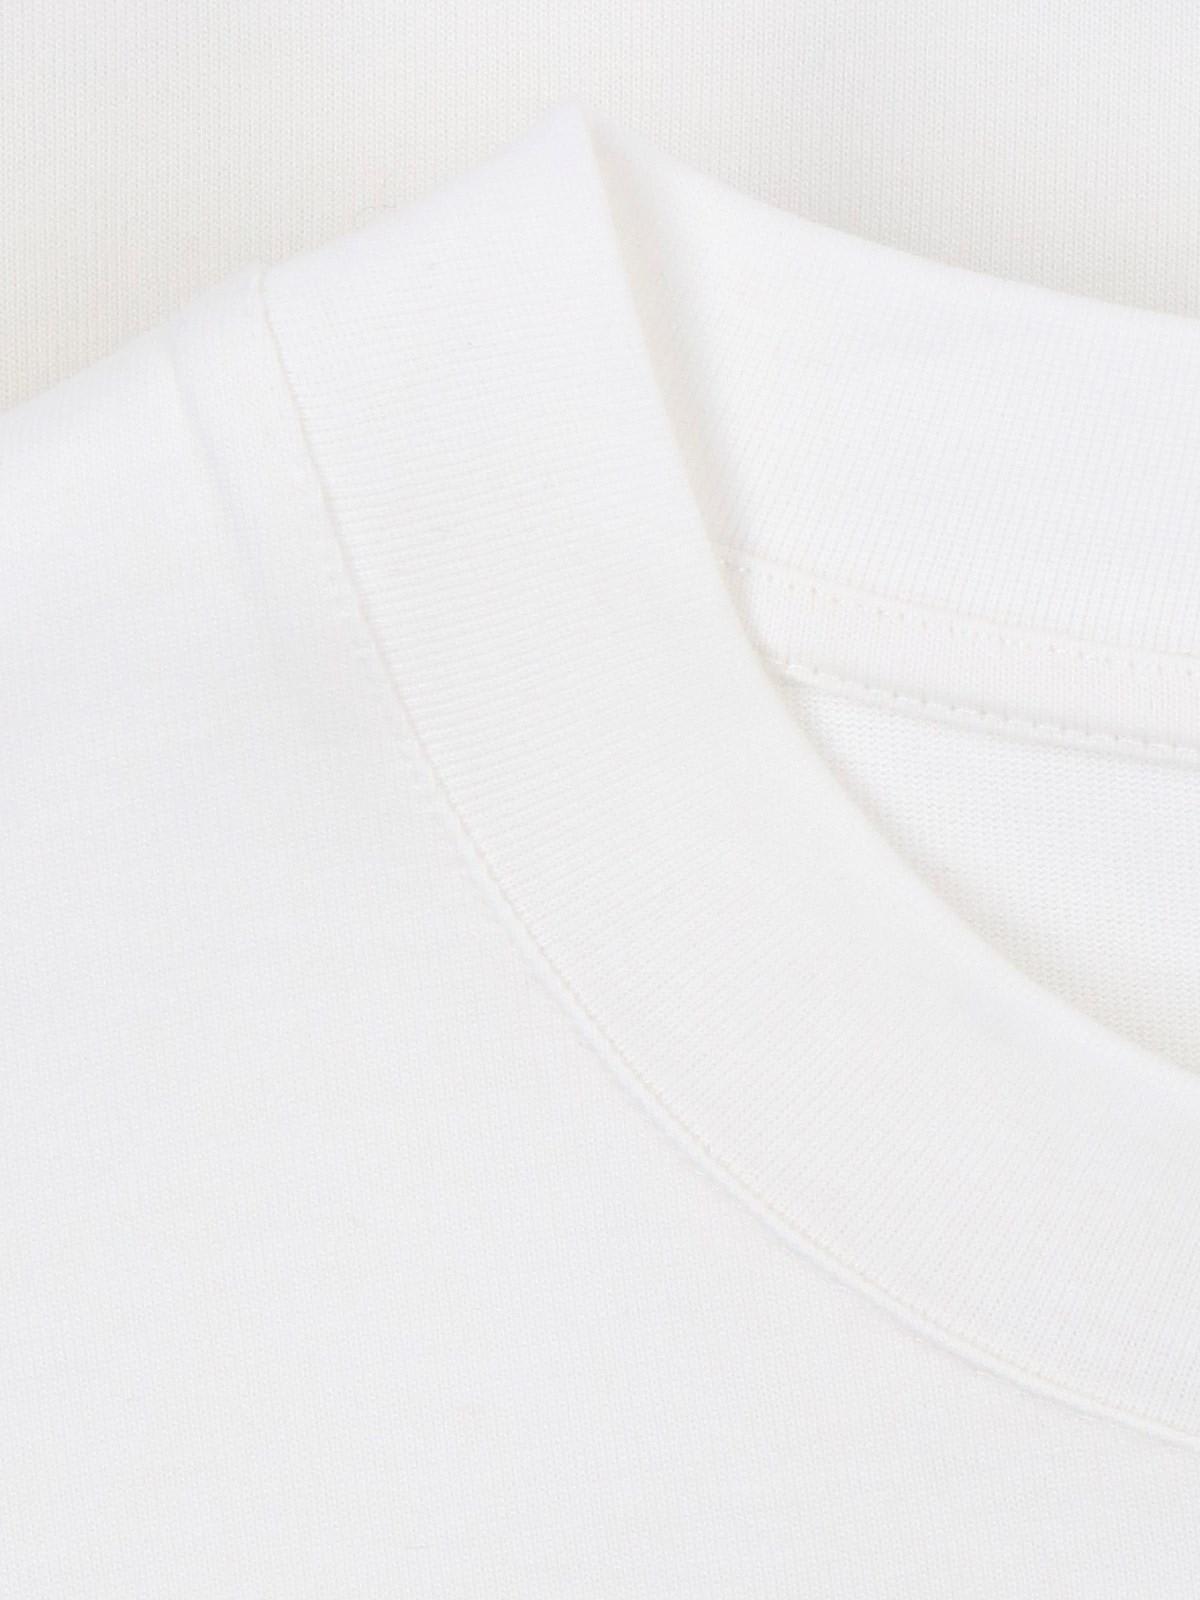 Studio Nicholson Oversize T-shirt In White